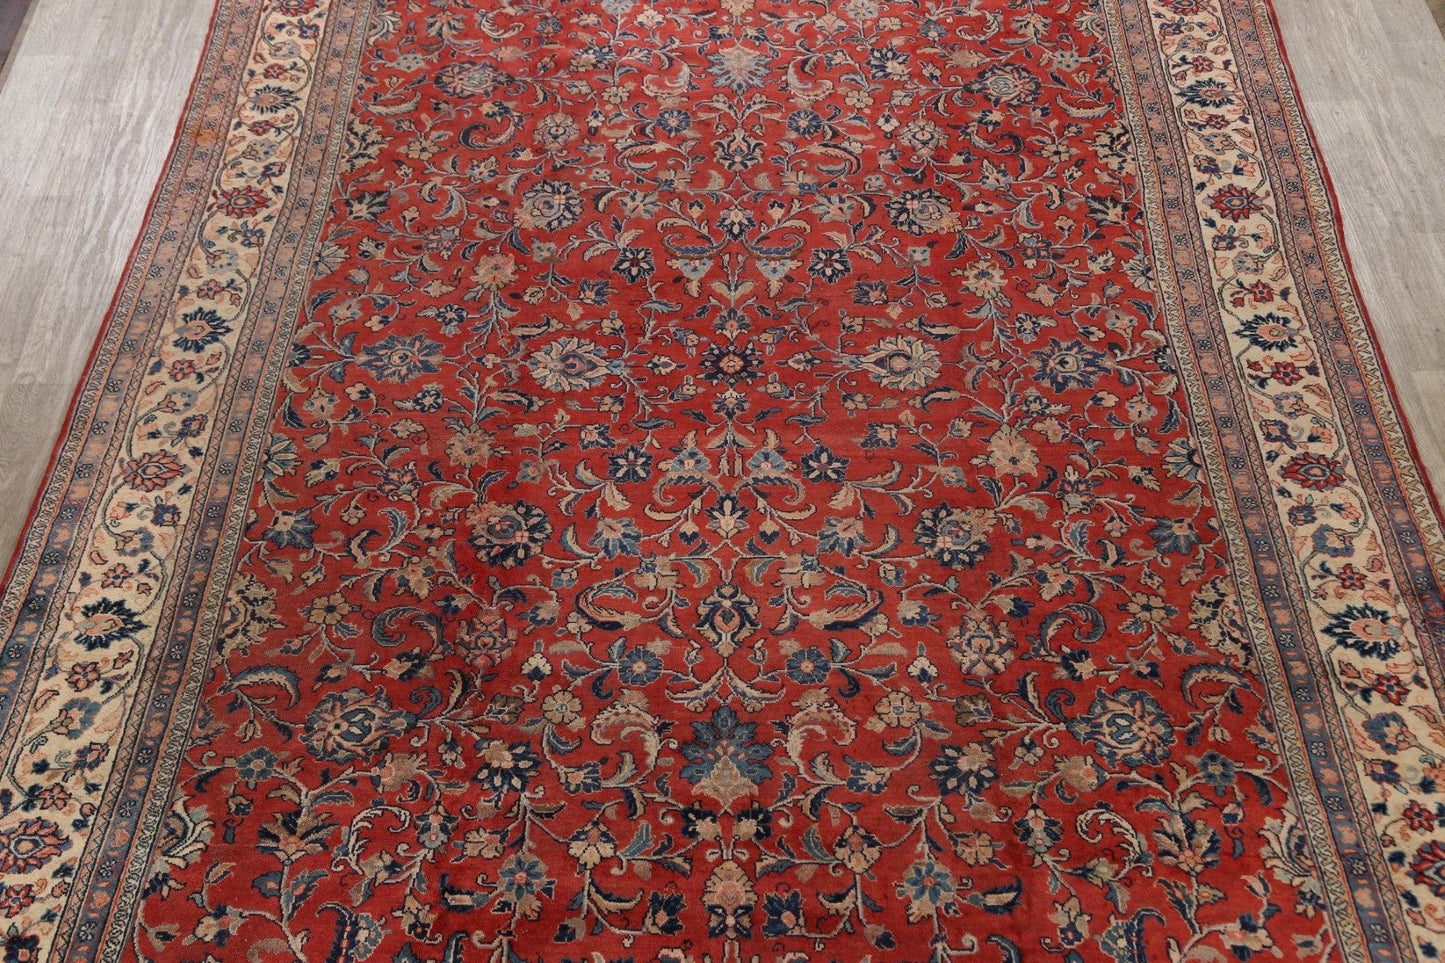 Antique Floral Mahal Persian Area Rug 10x14